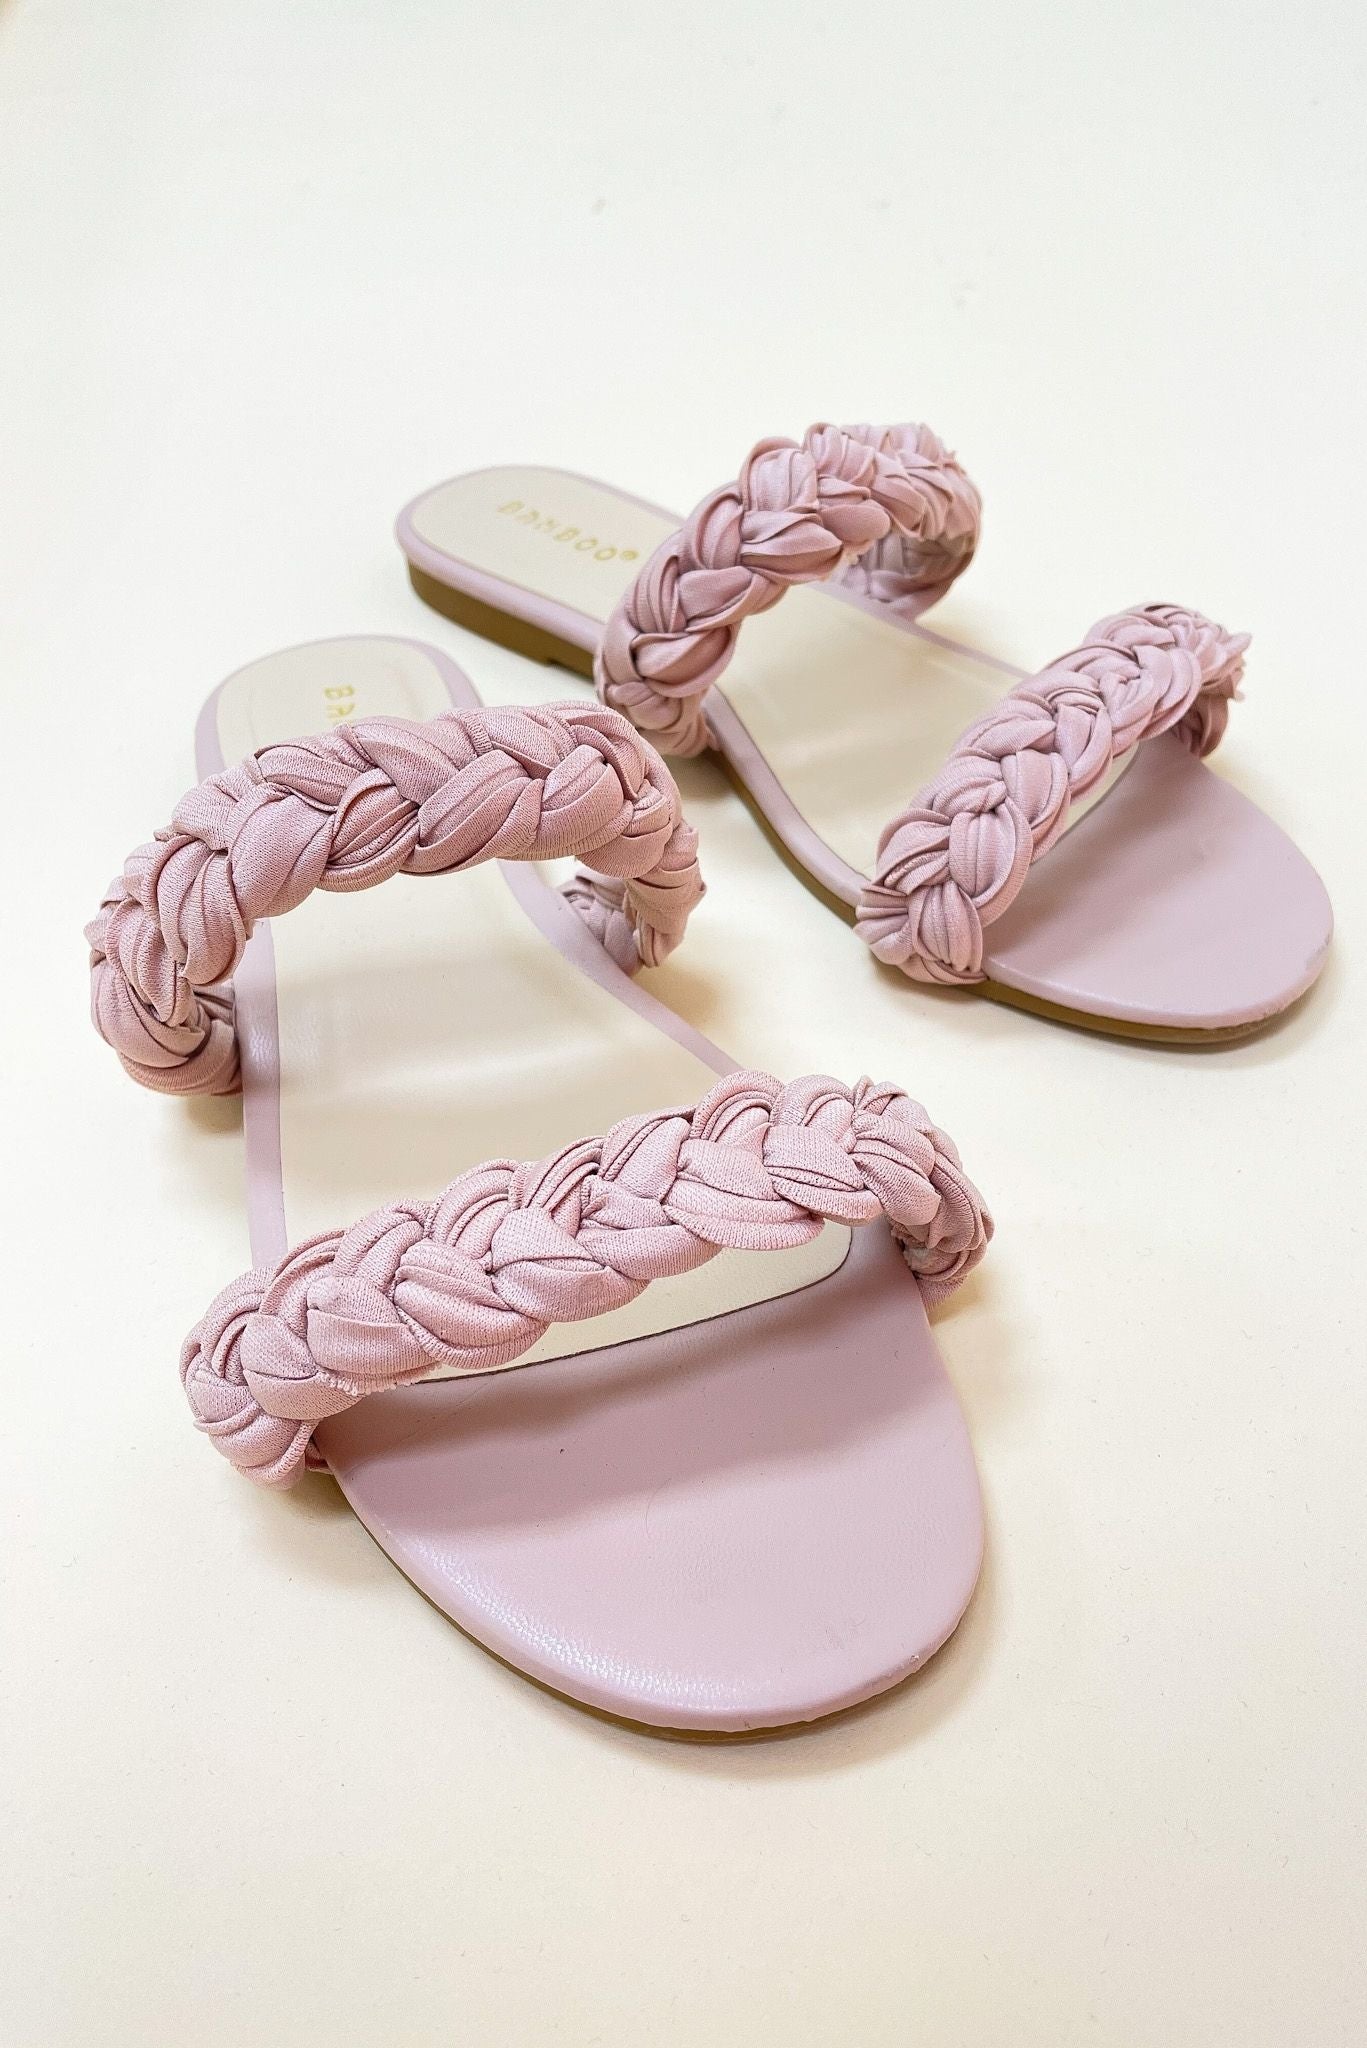 Blush Double Braided Strap Sandals*FINAL SALE*